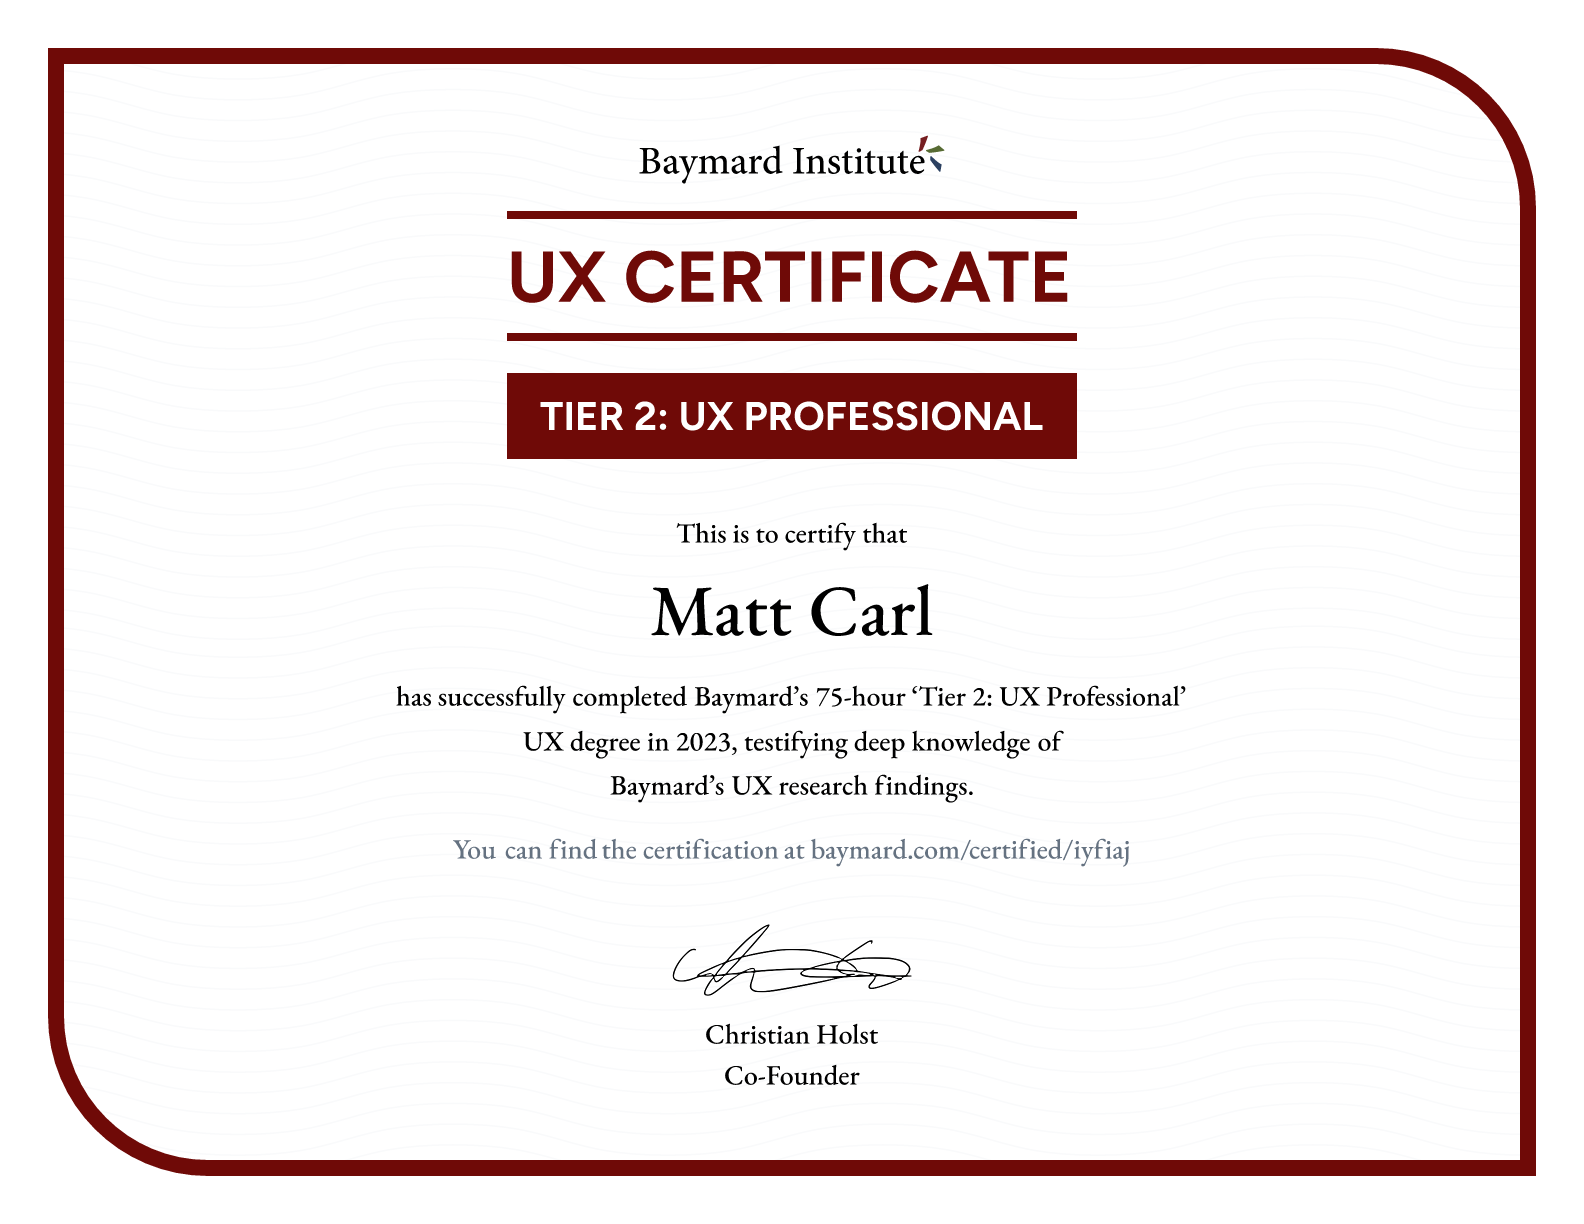 Matt Carl’s certificate